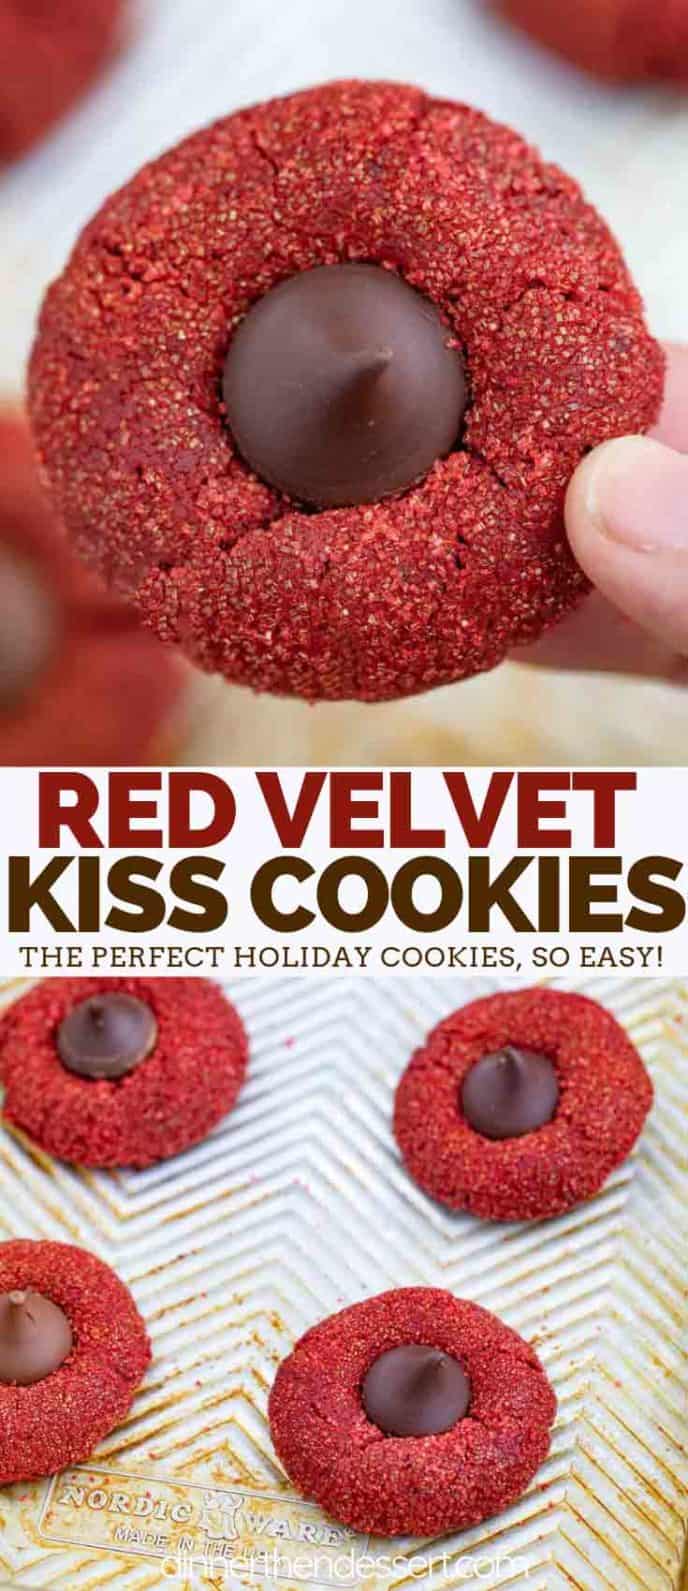 Red Velvet Hershey's Kiss Cookies Collage